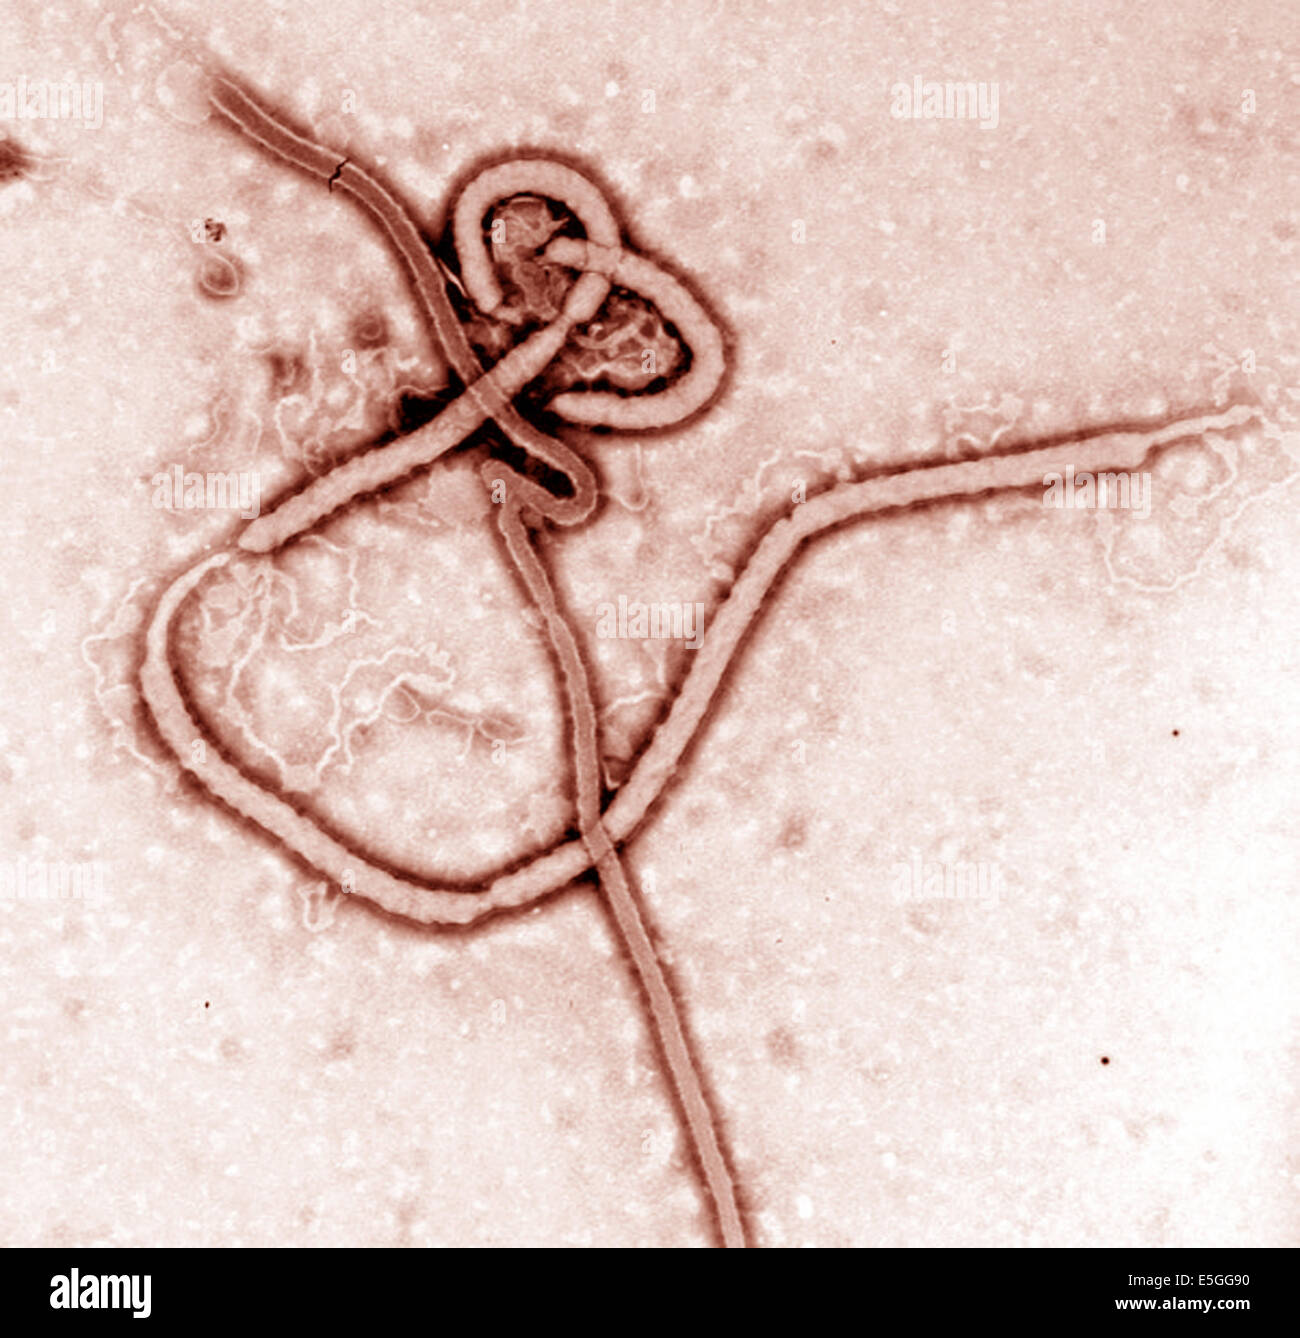 The Ebola virus. Ebola hemorrhagic fever (Ebola HF) is a severe, often-fatal disease in humans and nonhuman primates (monkeys, g Stock Photo